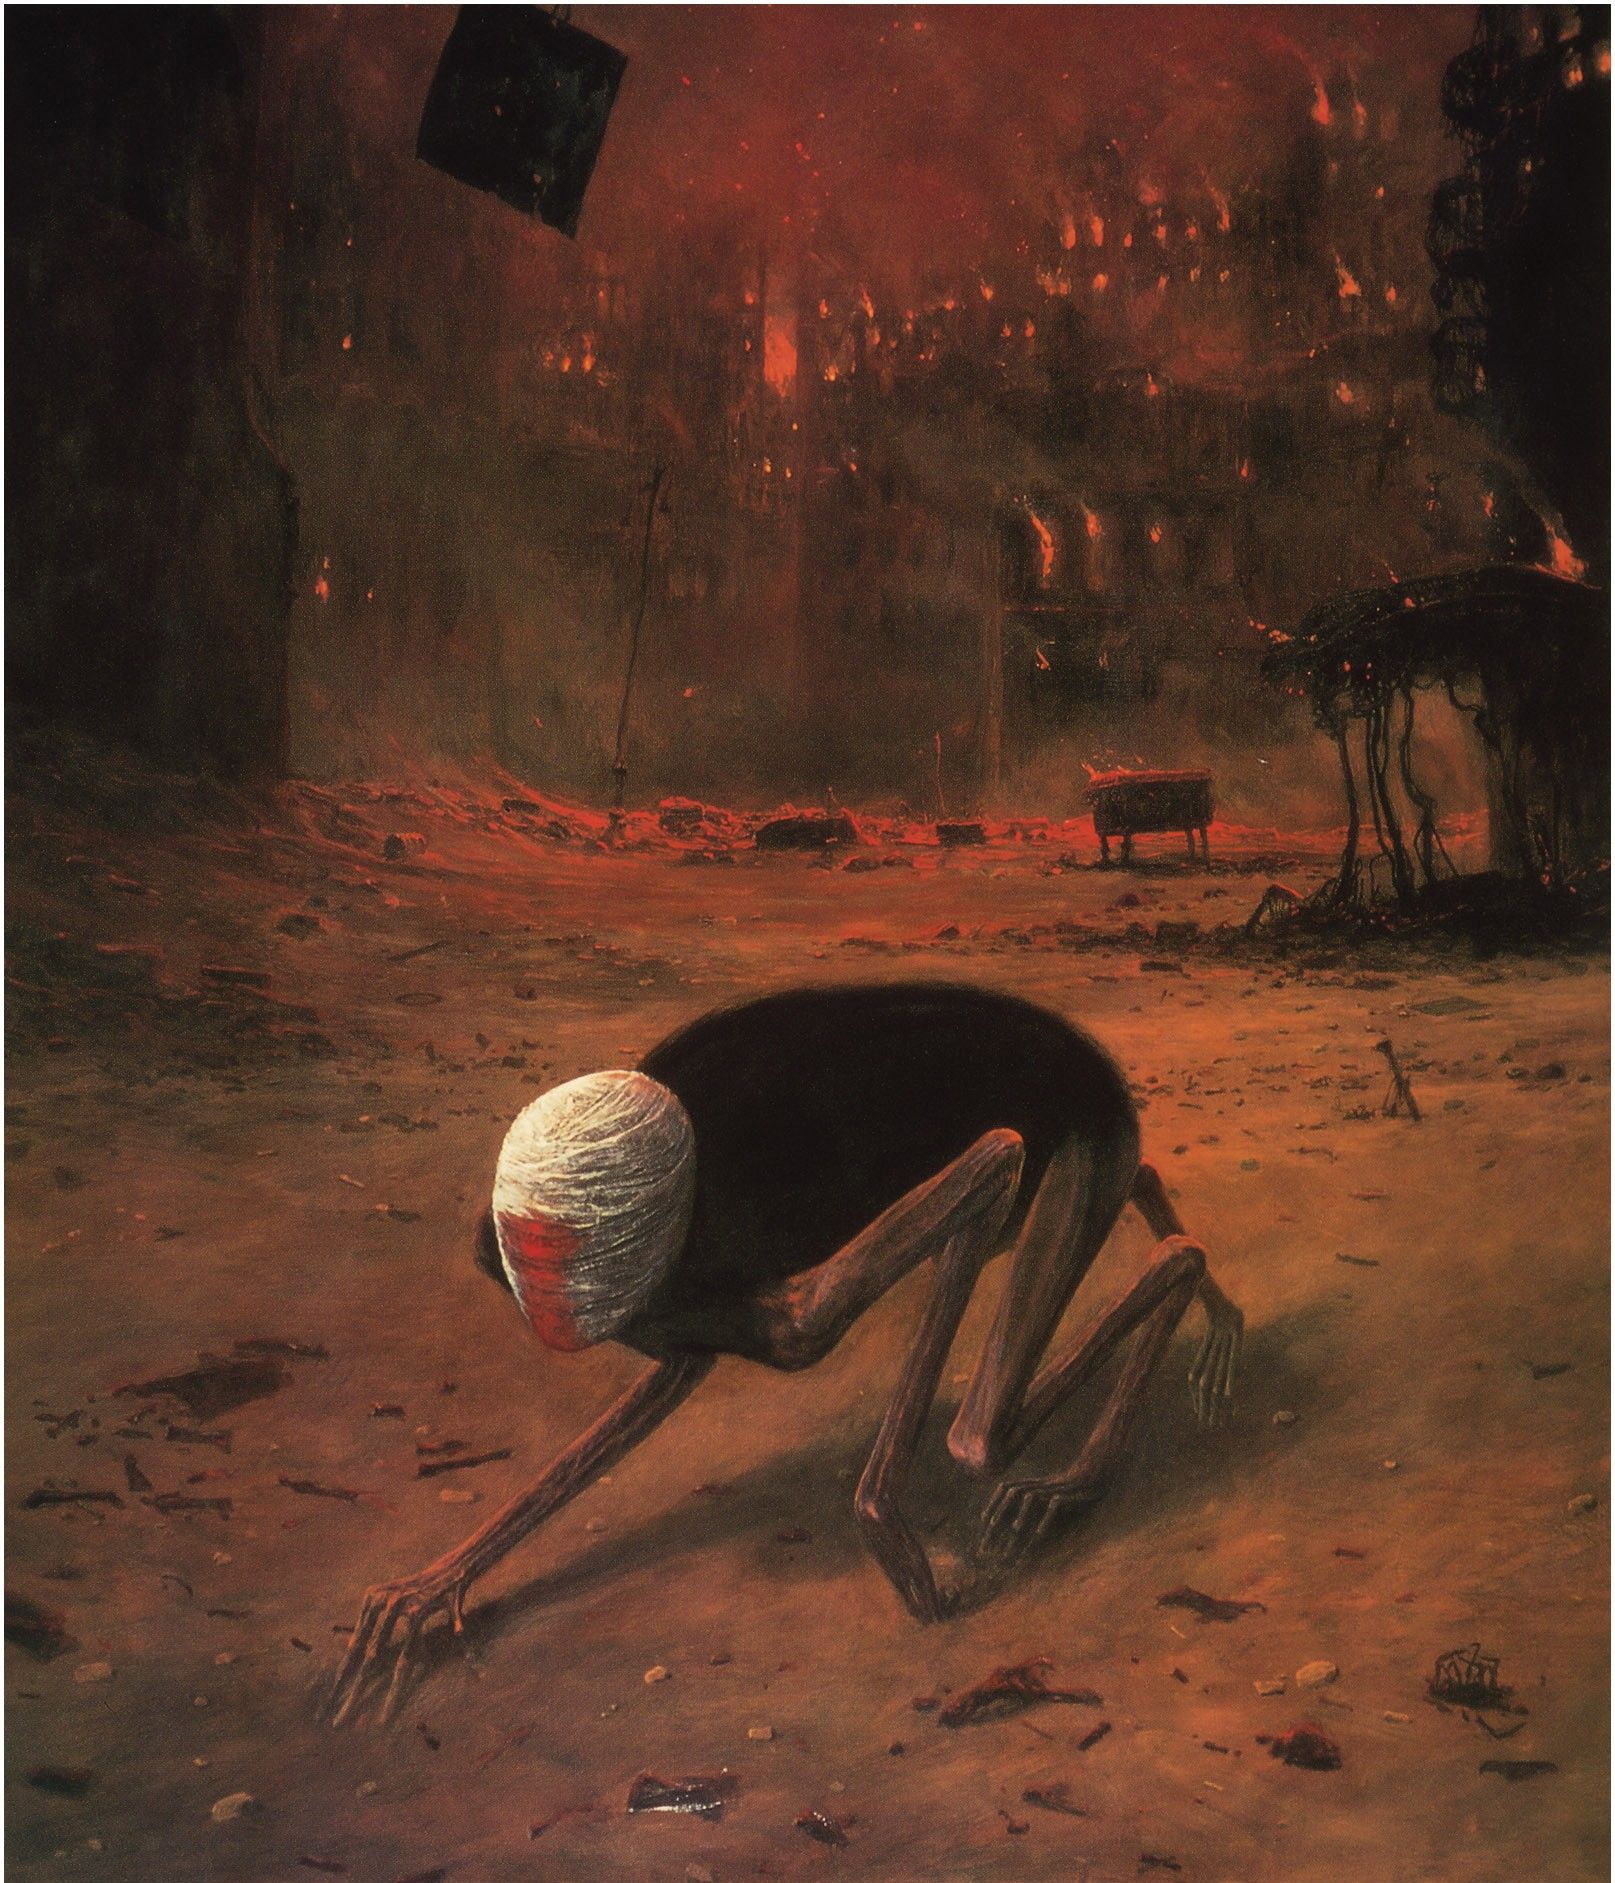 Zdzisław Beksiński, picture, surreal, dark, cityscape, burning